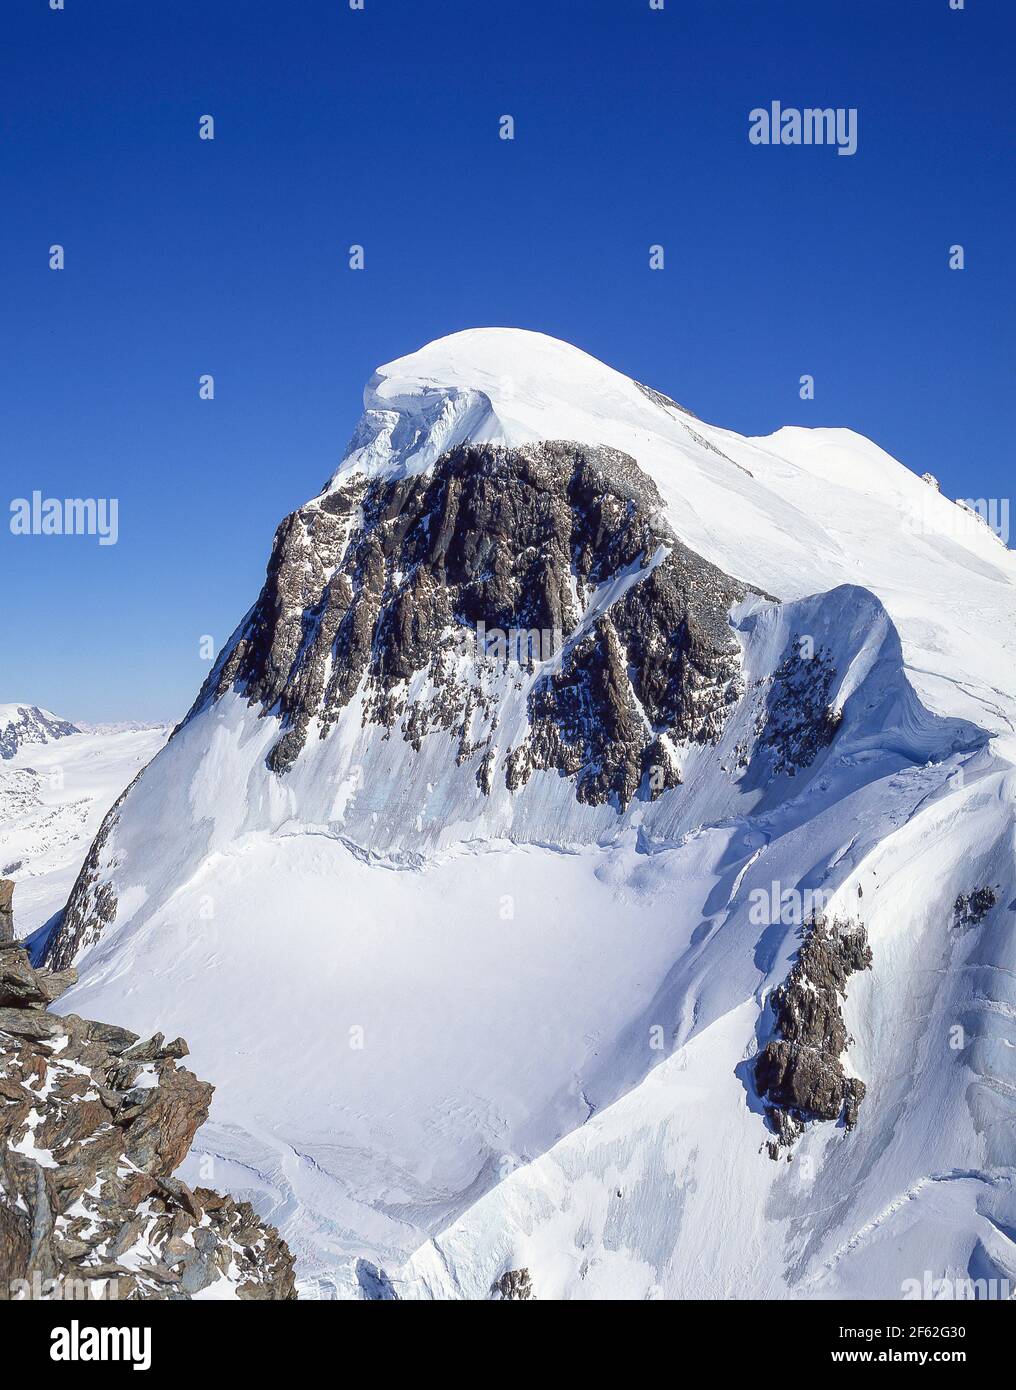 Snow-capped mountain summit in Swiss Alps, Verbier, Valais, Switzerland Stock Photo